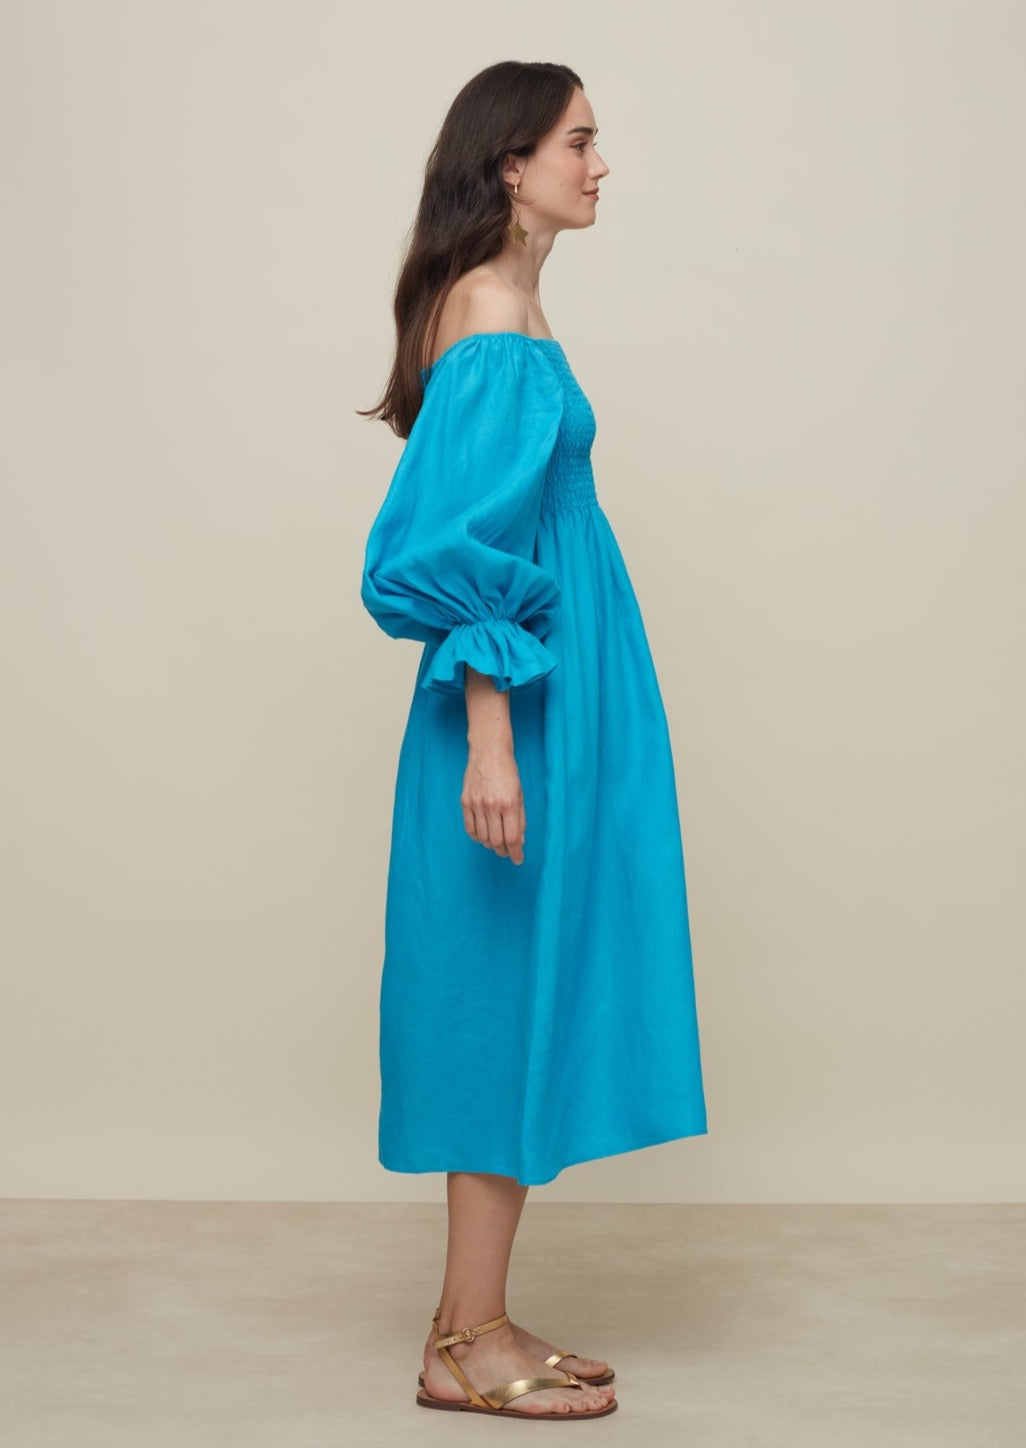 Galeria-Hortencia Turquoise Dress-Justbrazil